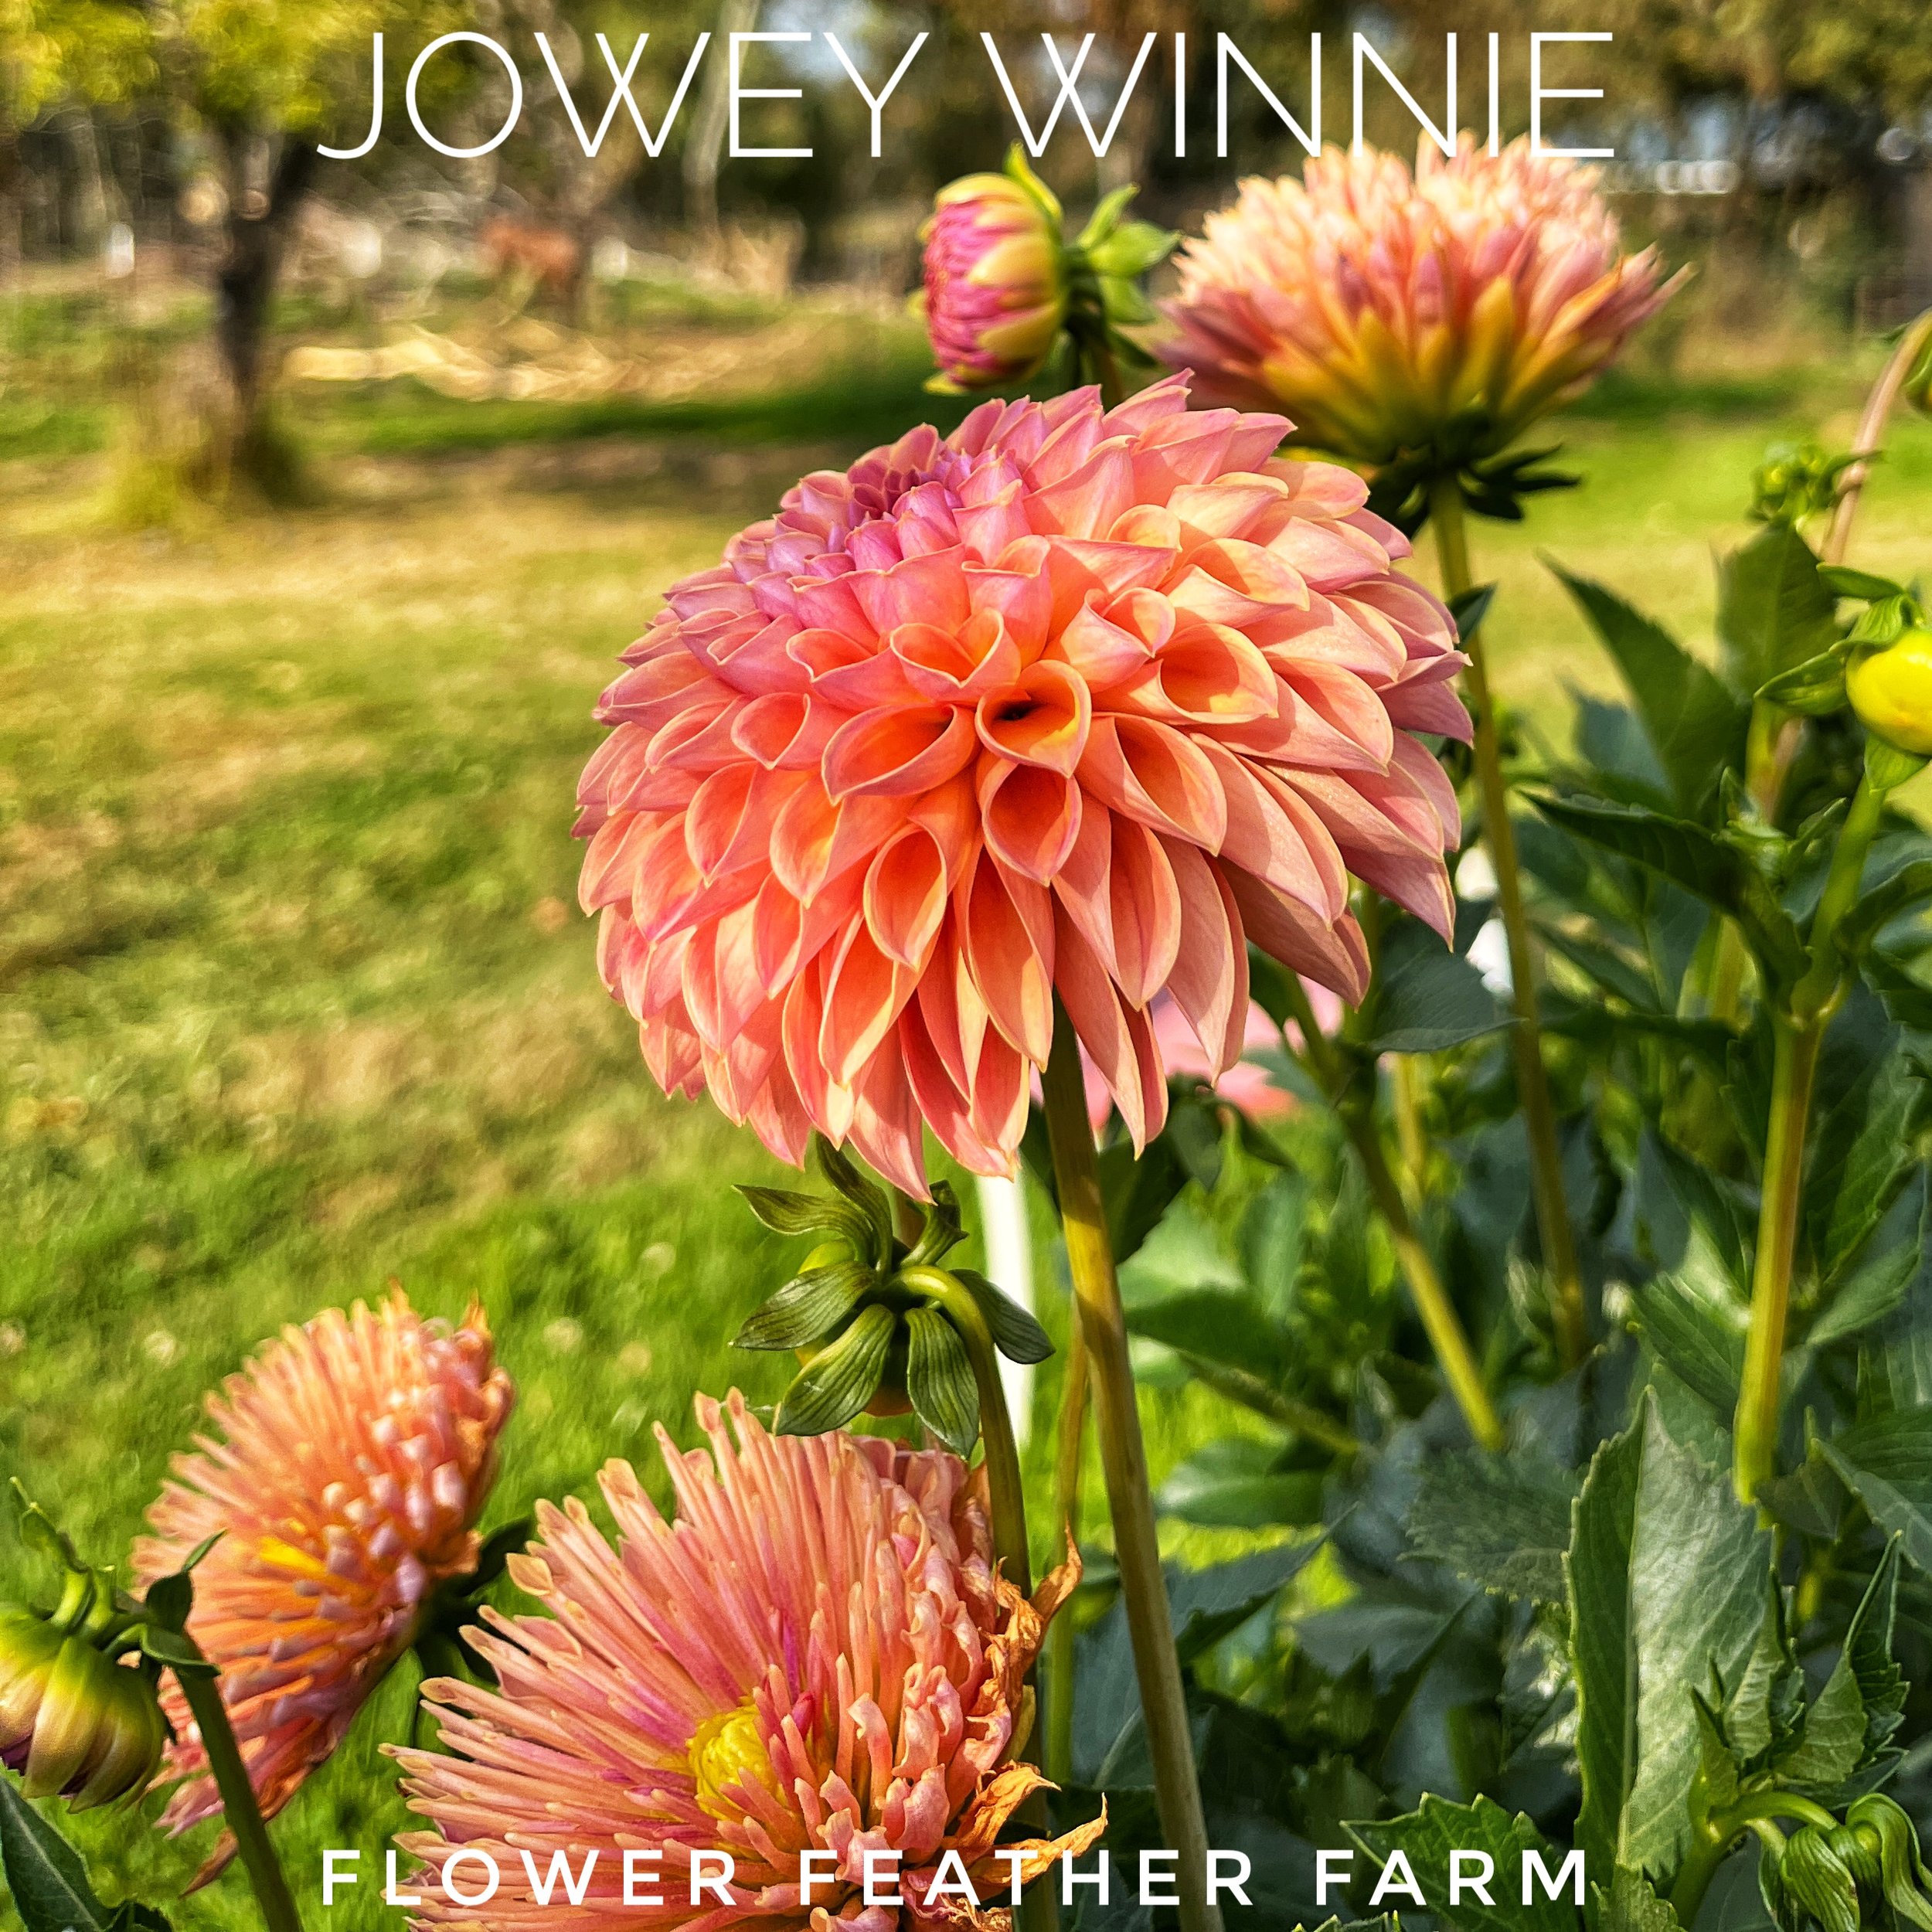 Jowey Winnie at Flower Feather Farm, chicks &amp; dahlias